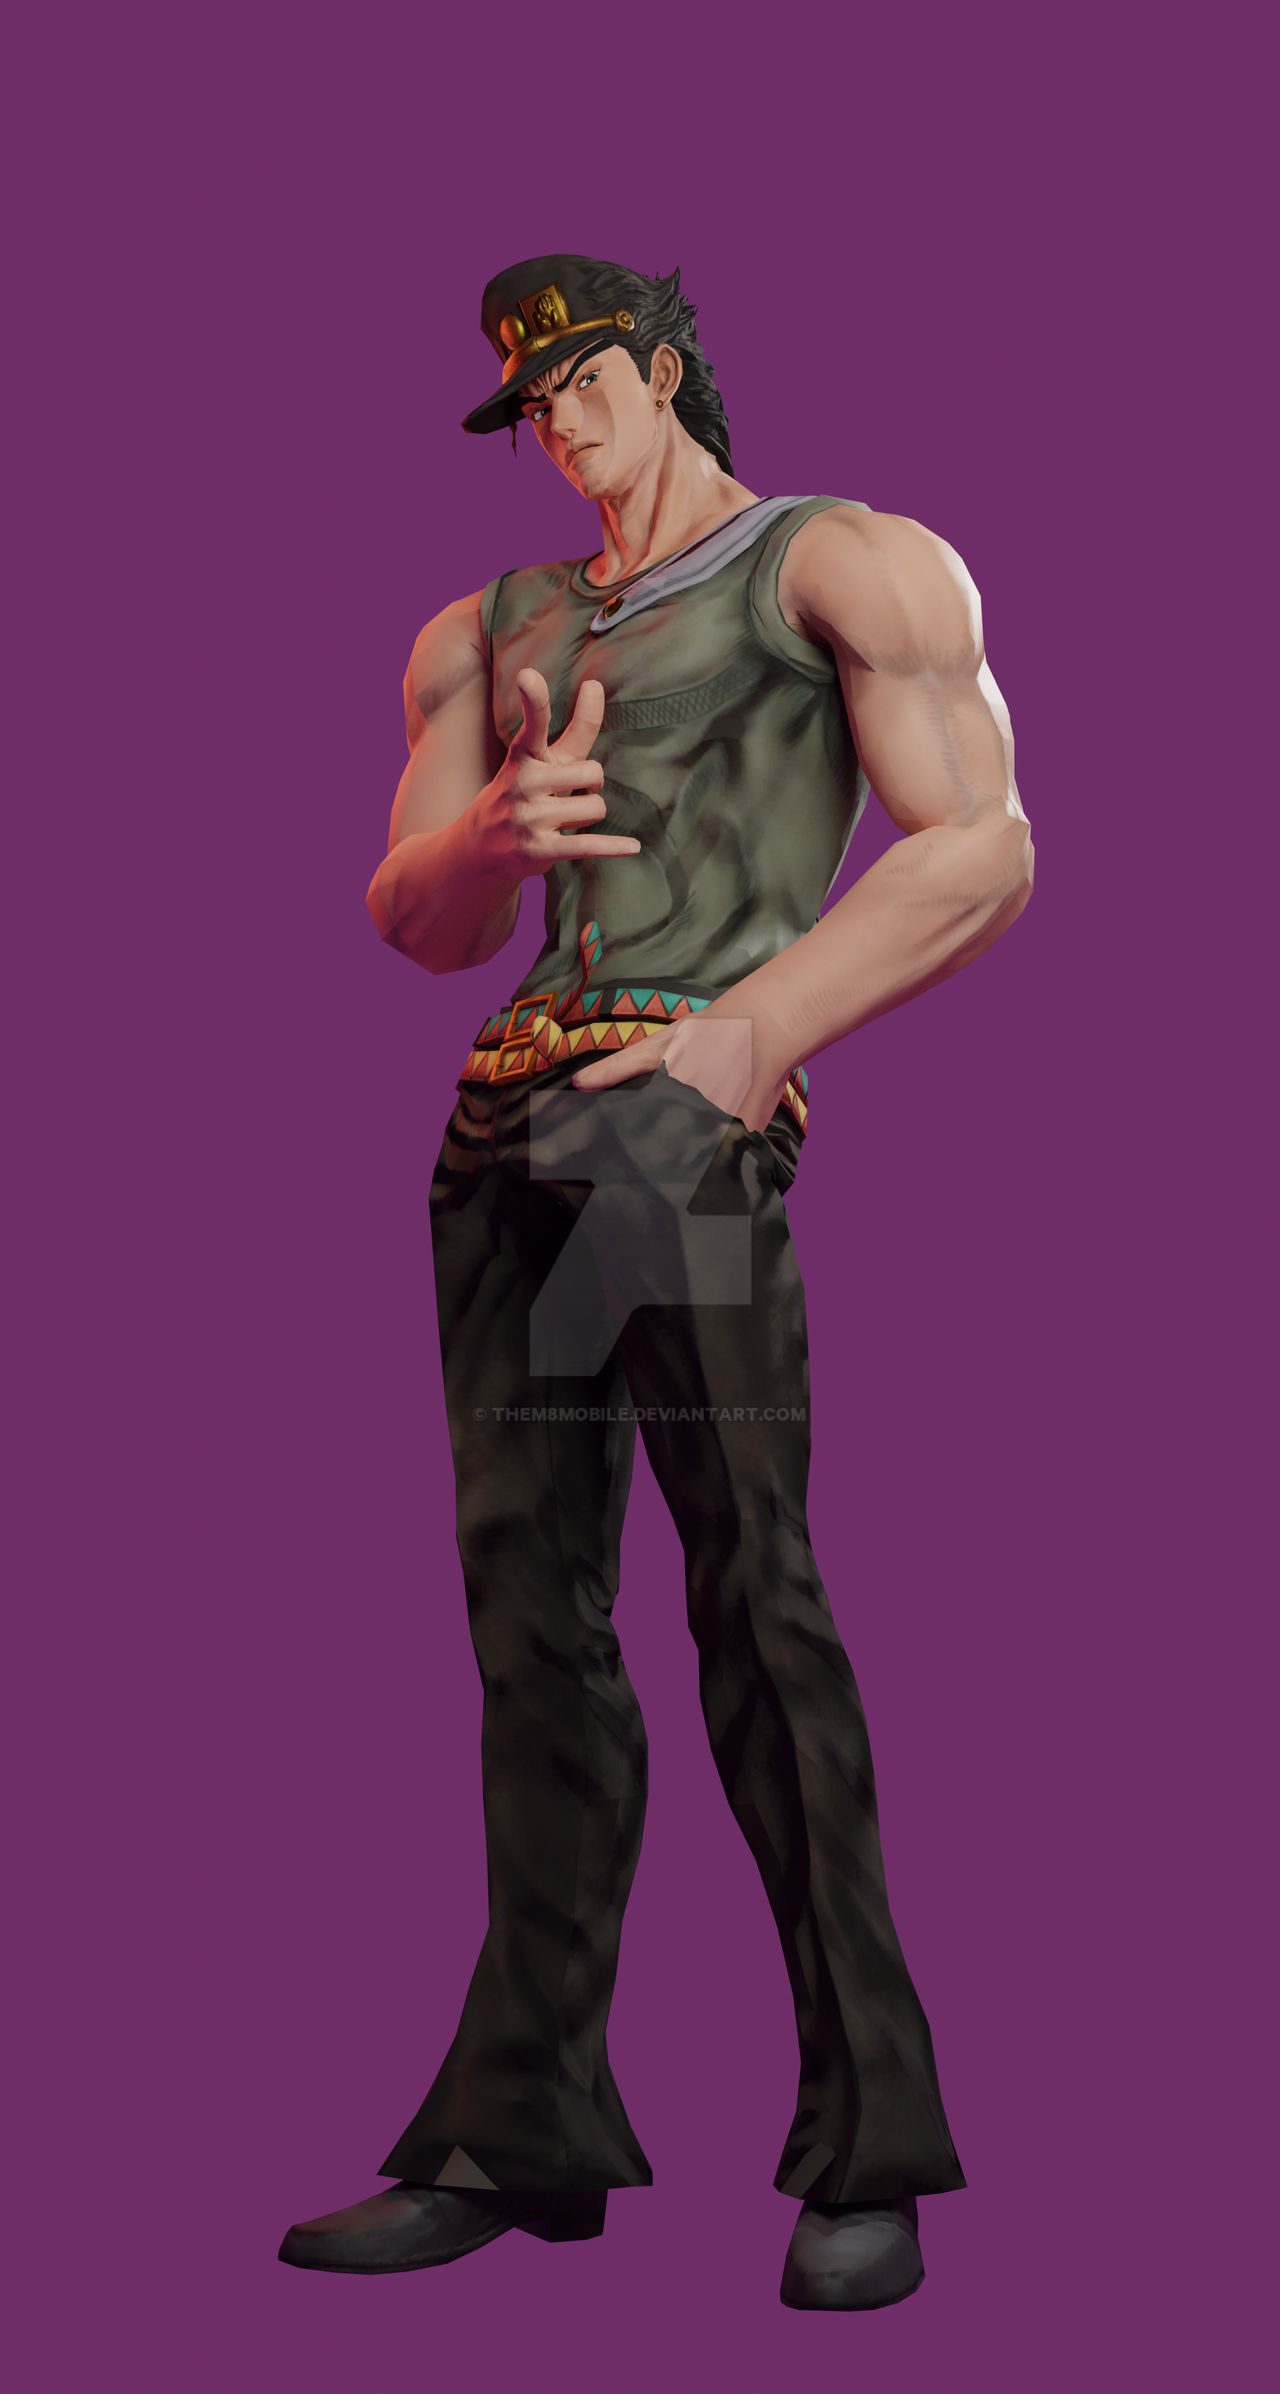 JJBA City Hall」 — Part 6 Jotaro Kujo - Last Survivor character model